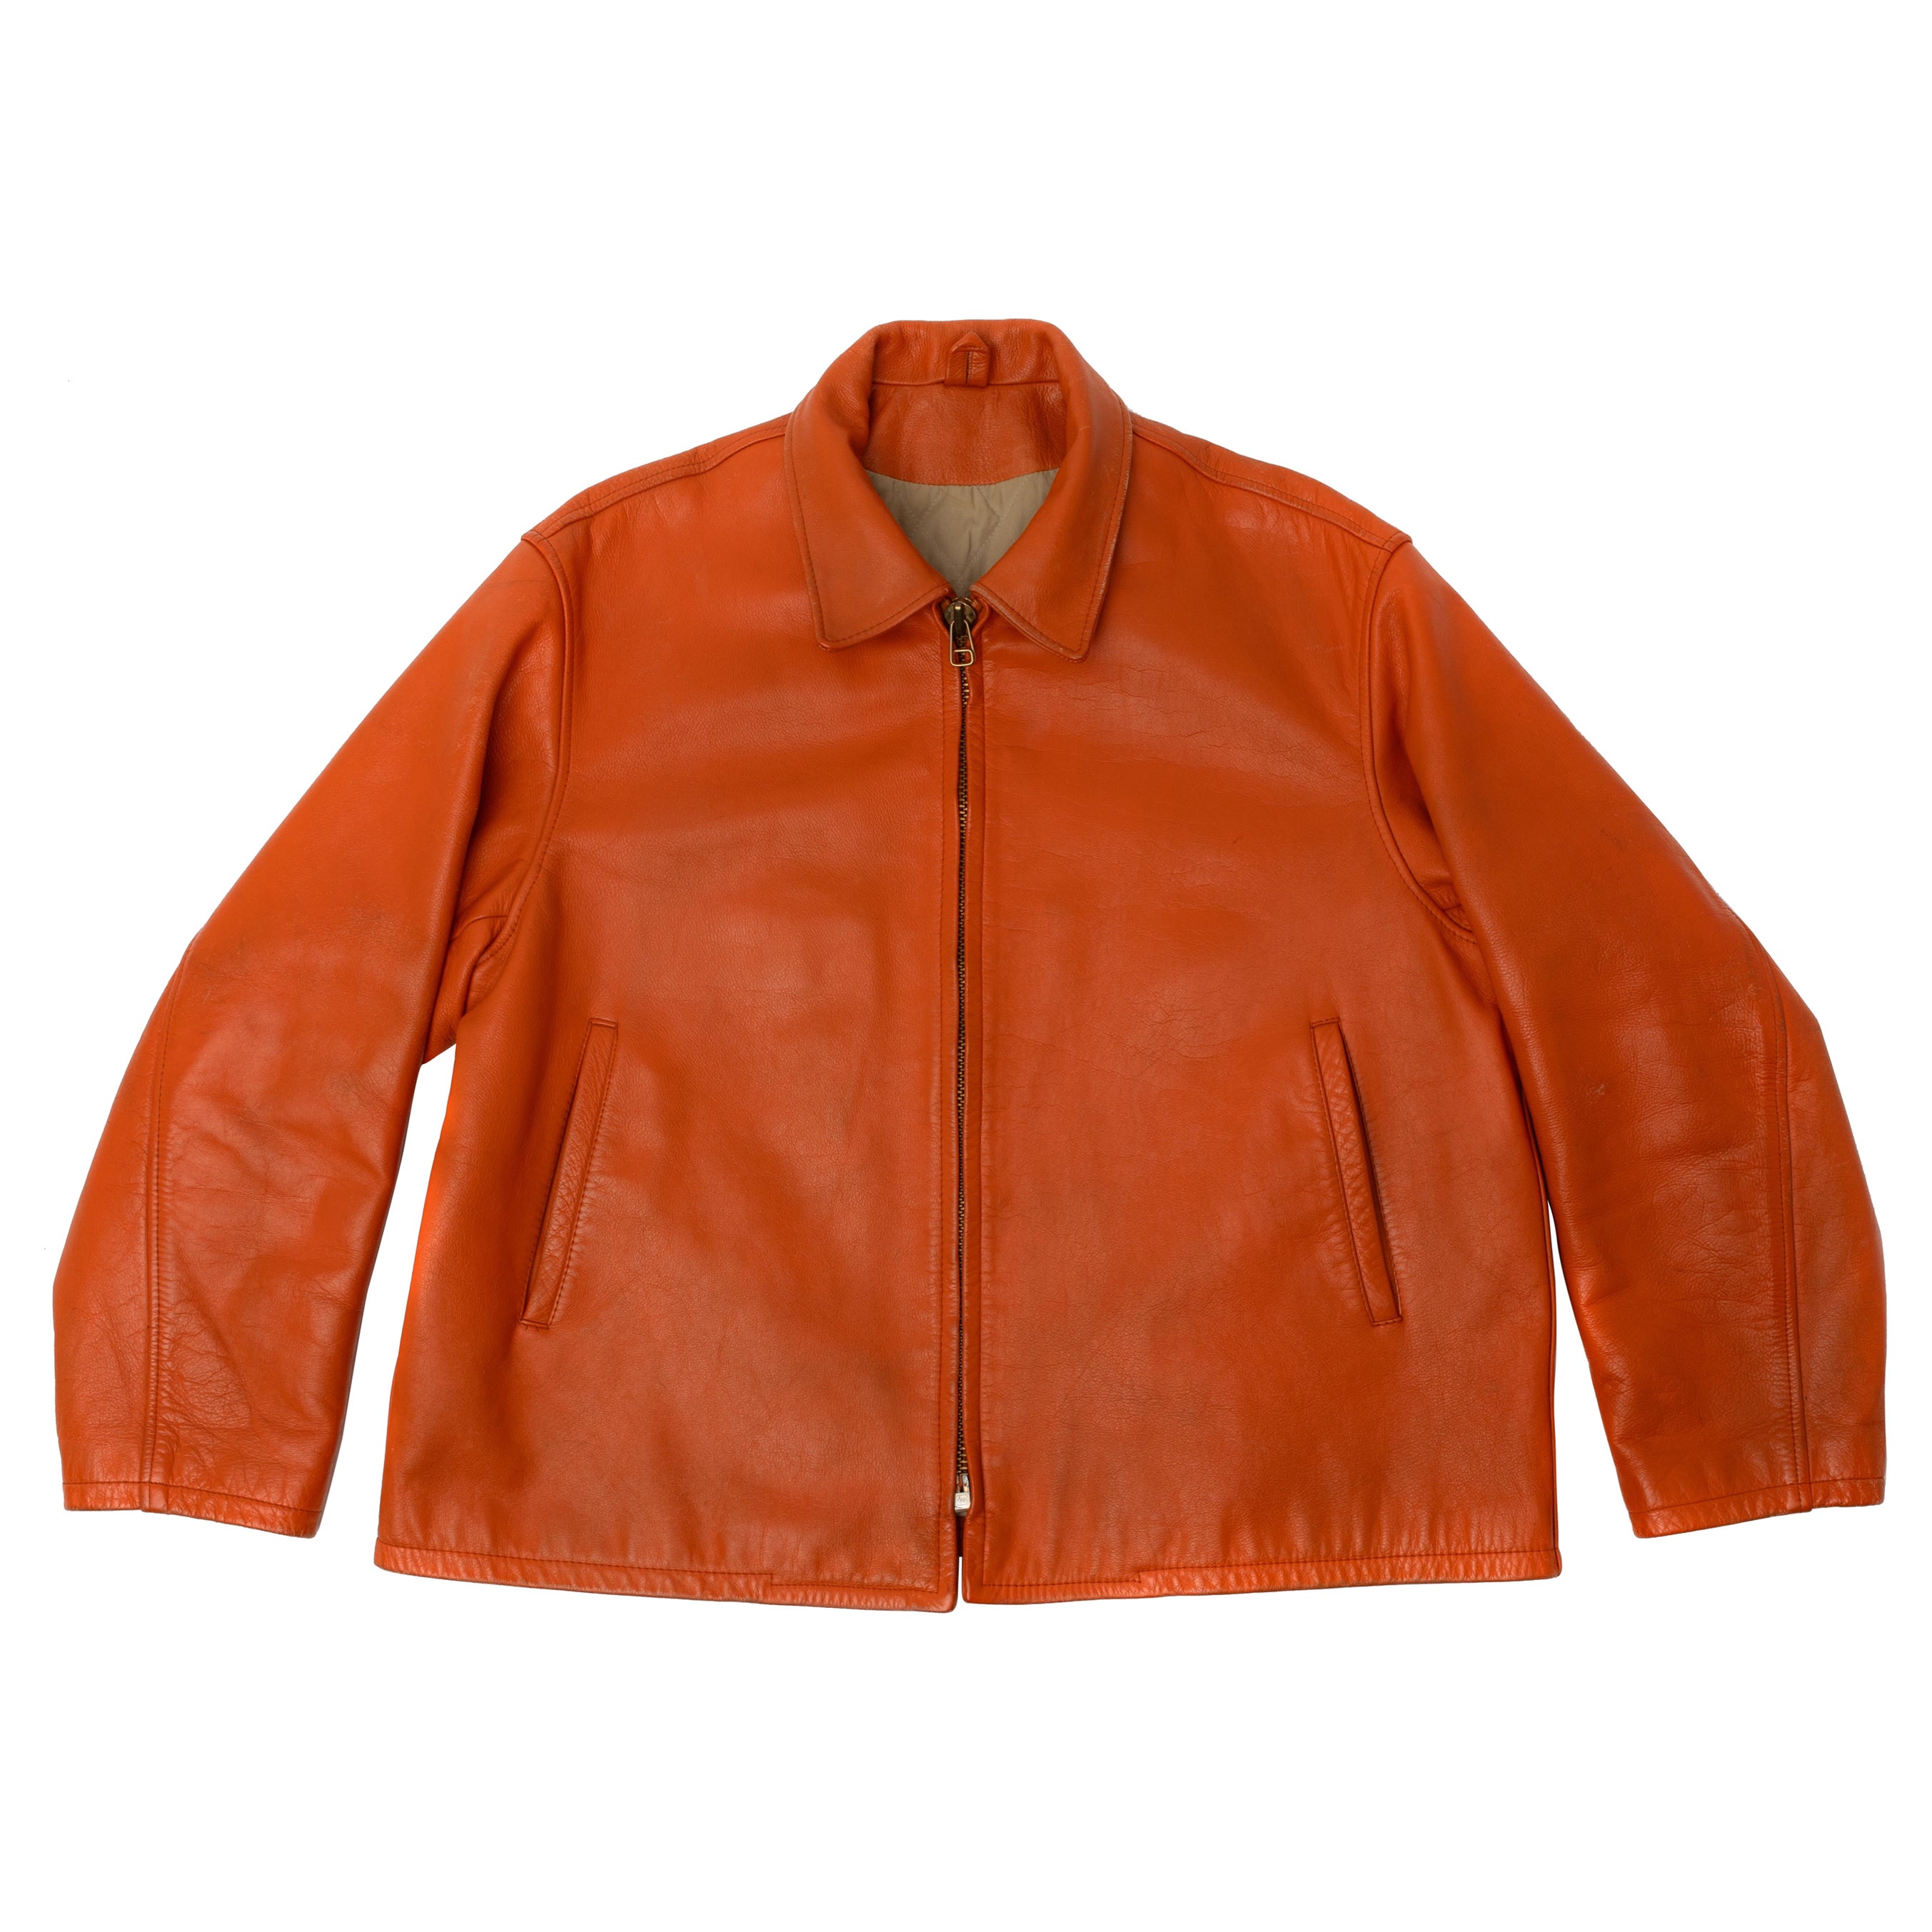 Yohji Yamamoto Orange Leather Jacket 1991 AW '6・1 THE MEN' For Sale